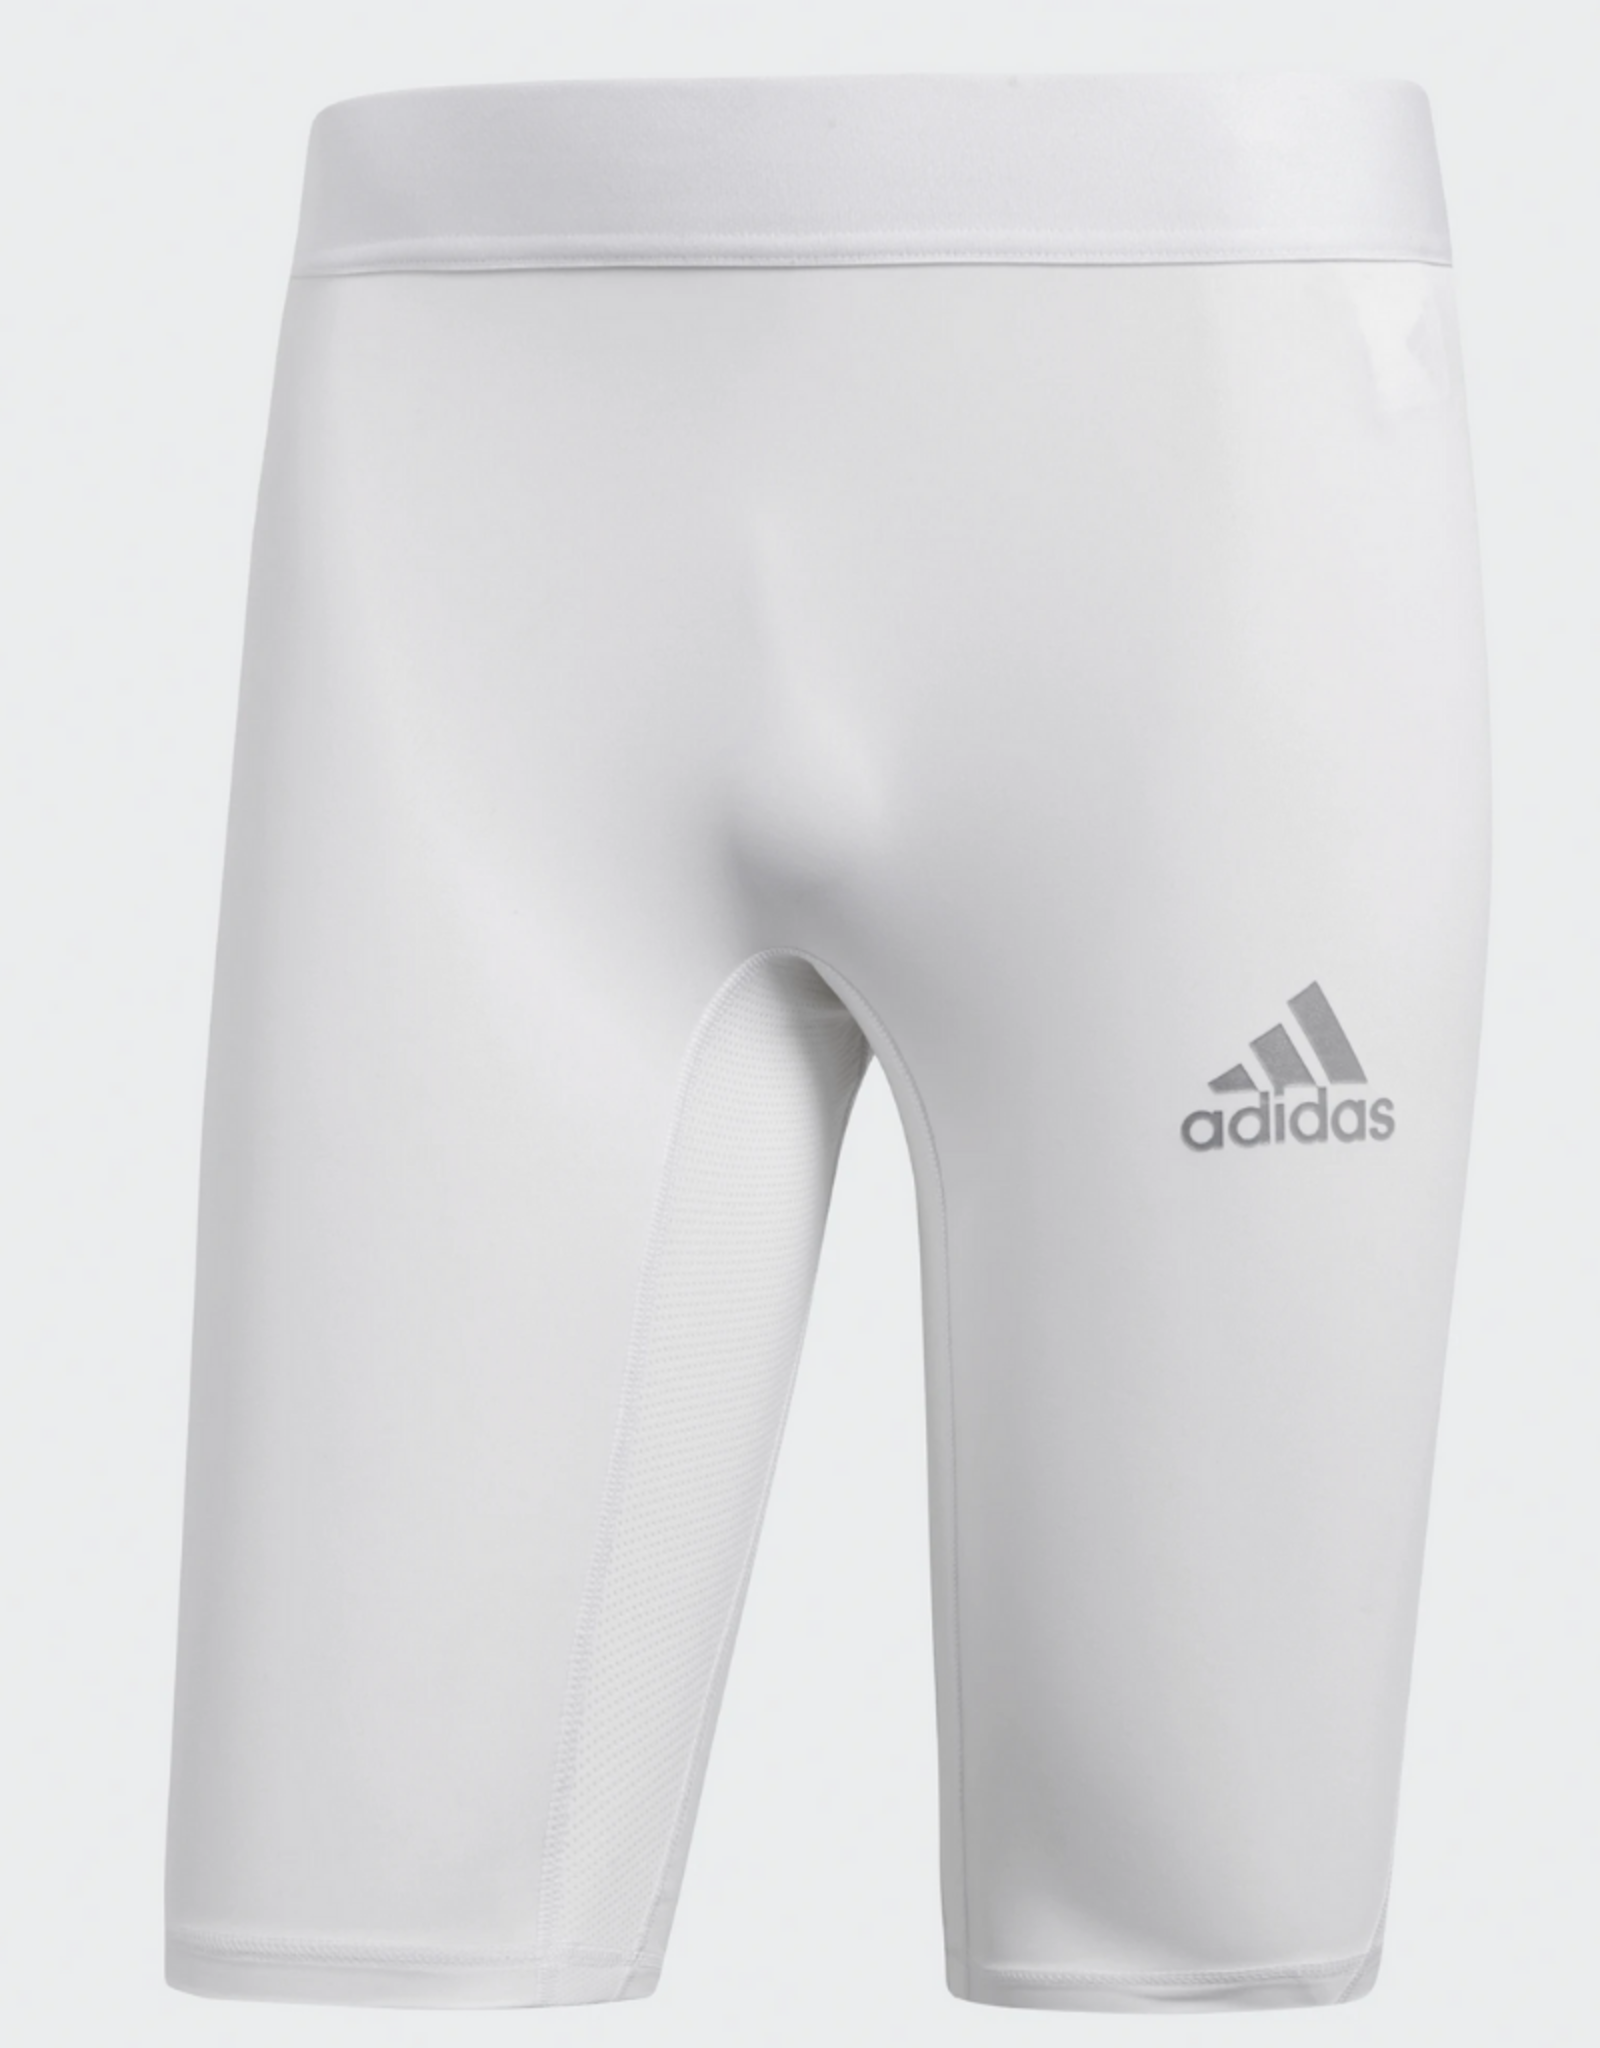 Adidas Adidas Men's Alphaskin Compression Short White